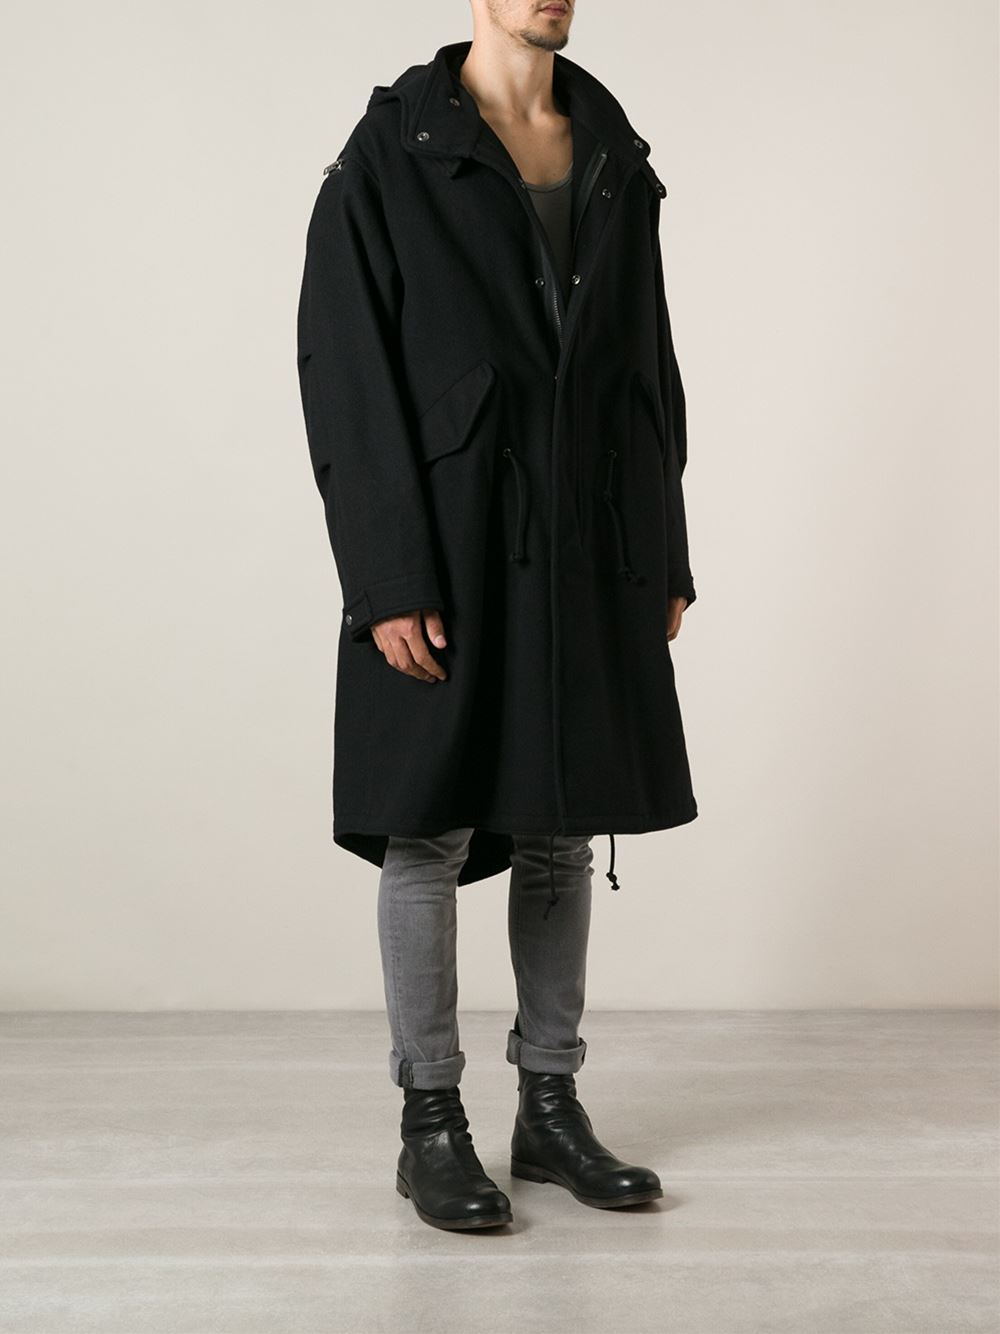 Lyst - Yohji yamamoto Oversize Hooded Coat in Black for Men